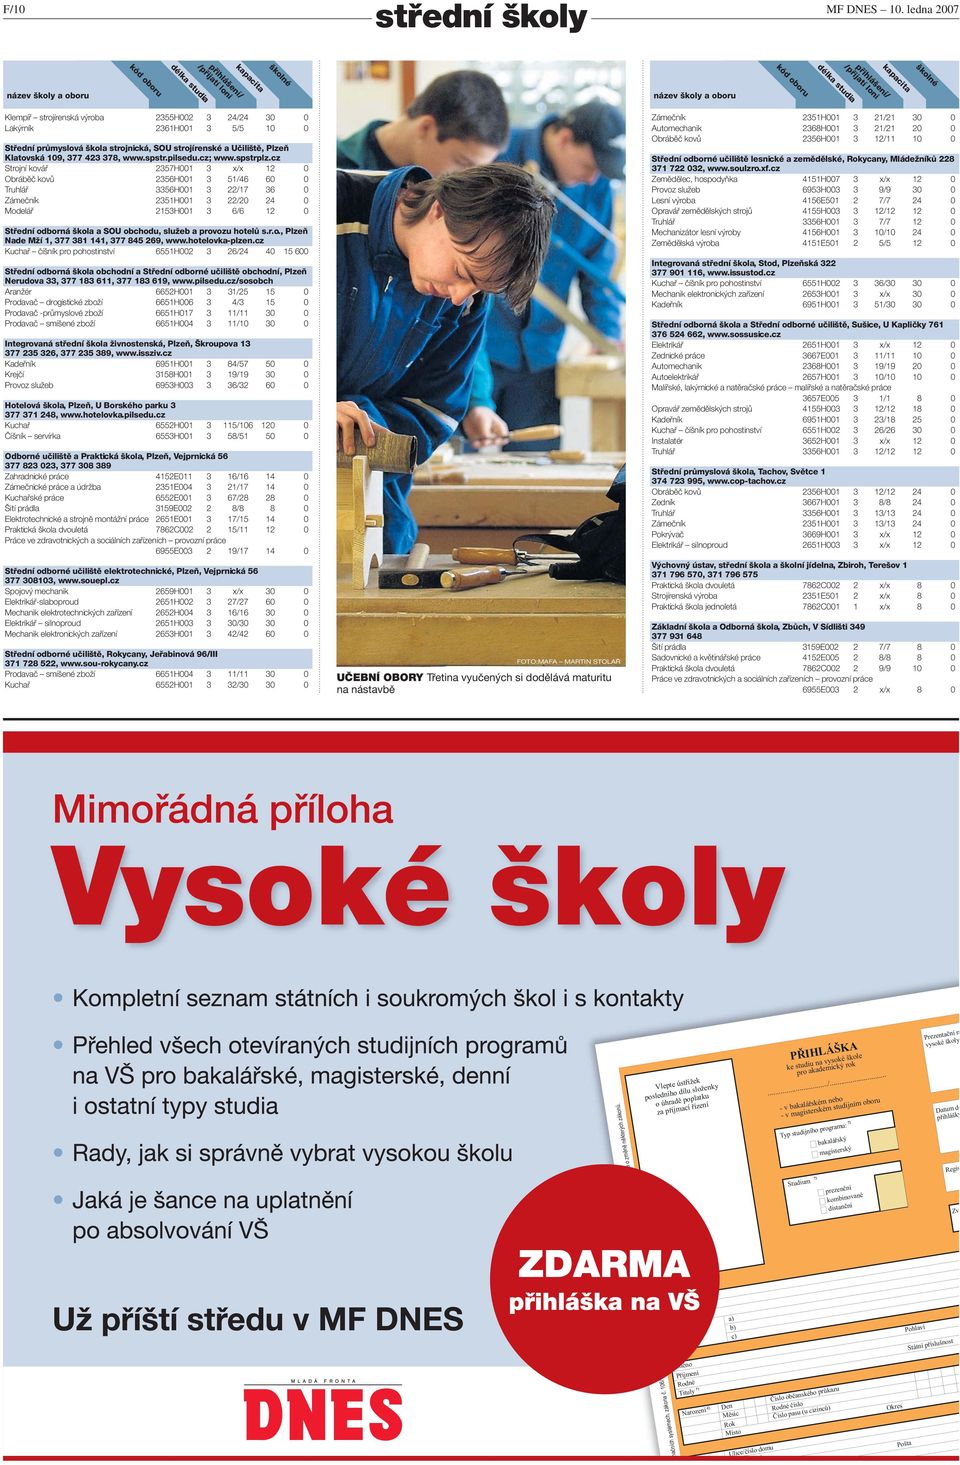 pilsedu.cz; www.spstrplz.